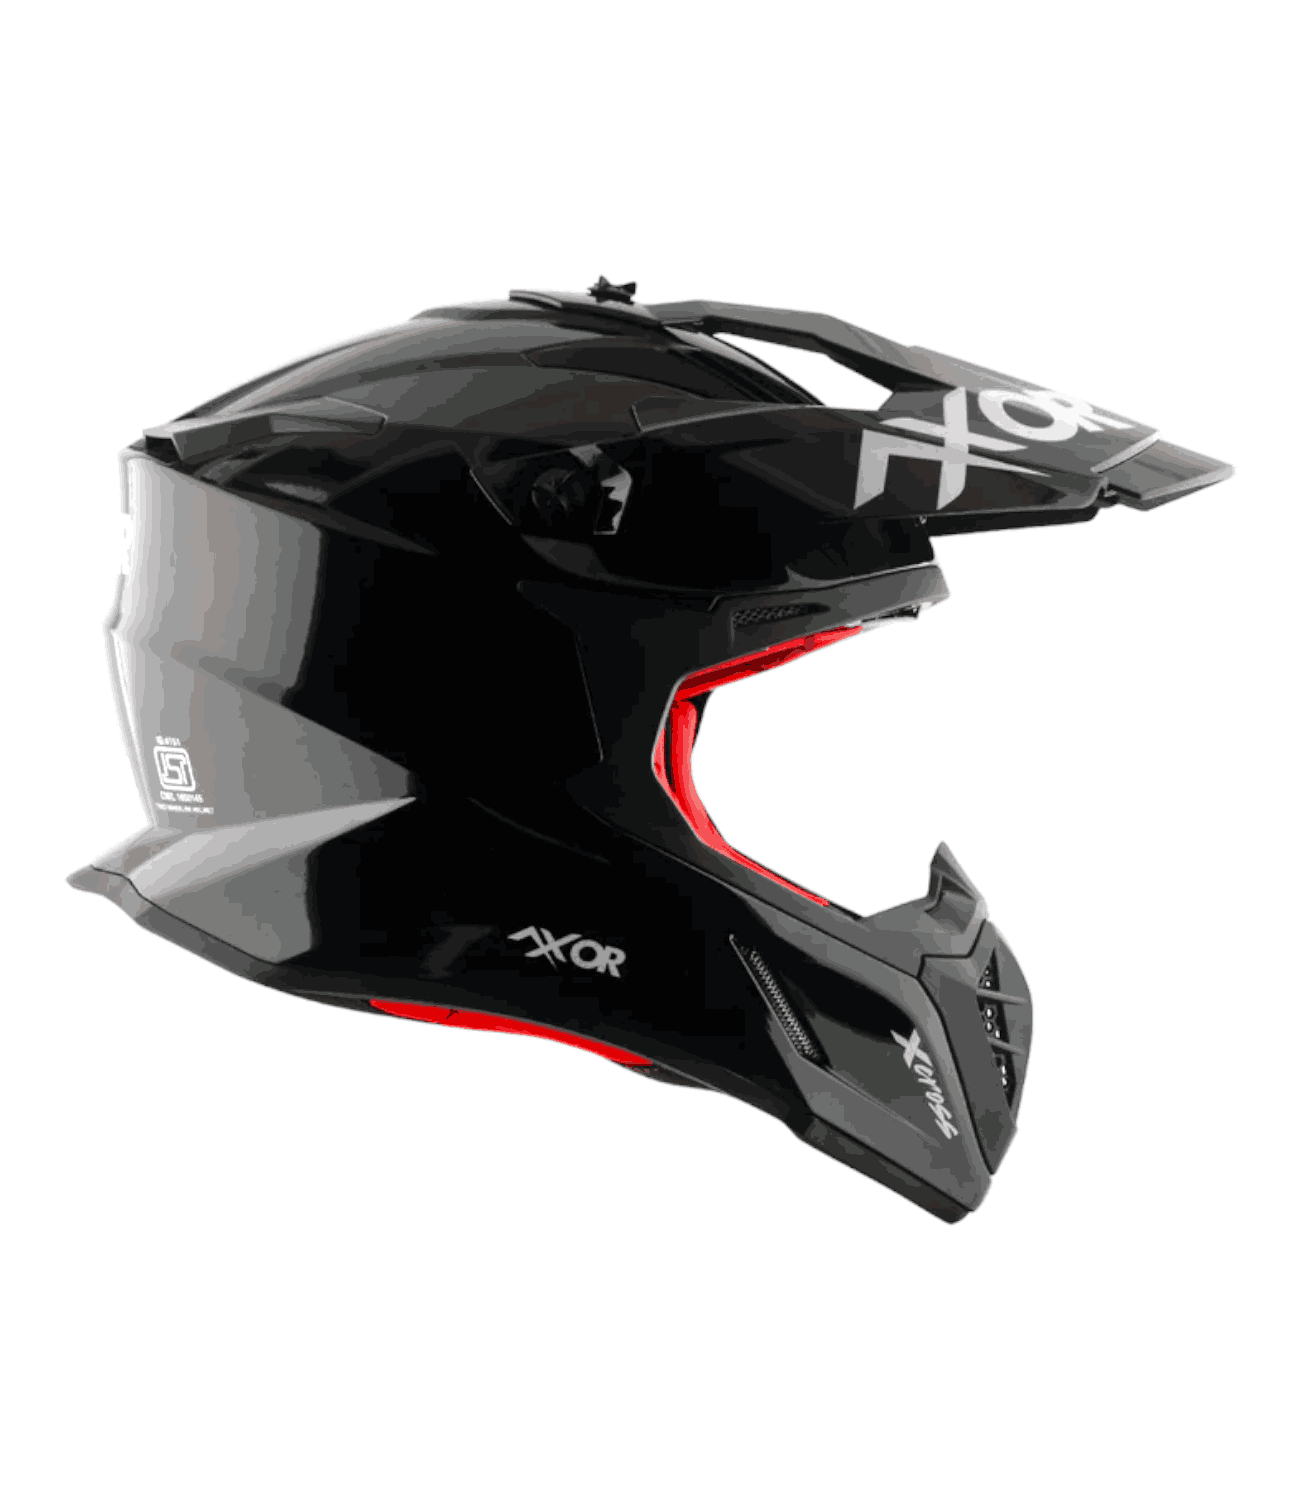 Axor X-Cross Single Color Helmet Black